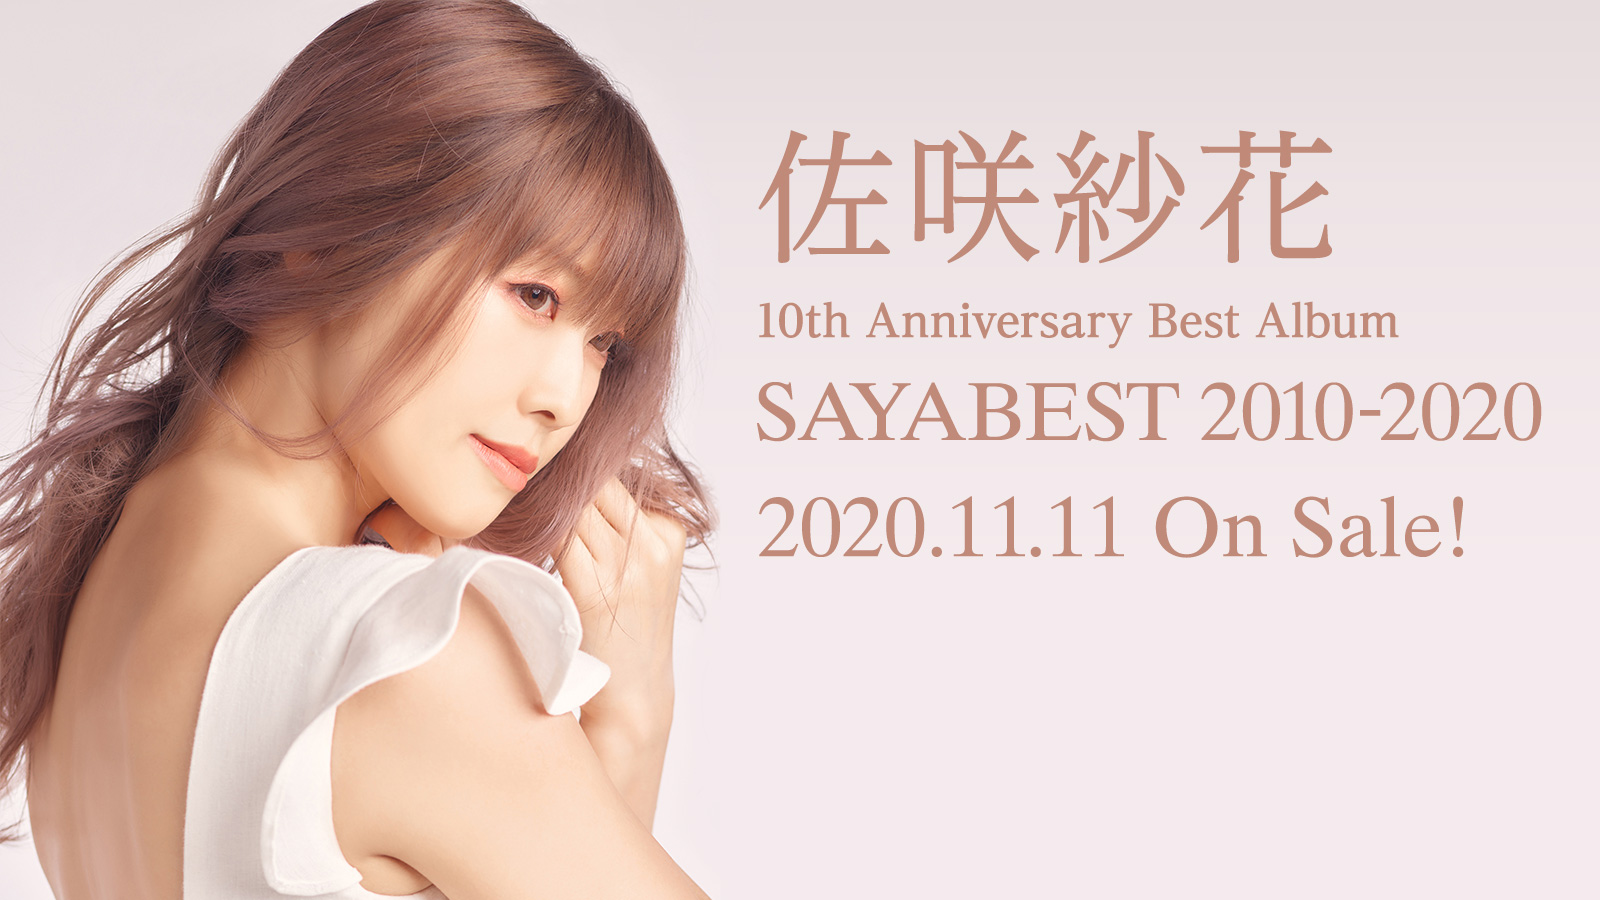 佐咲紗花 10th Anniversary Best Album「SAYABEST 2010-2020」